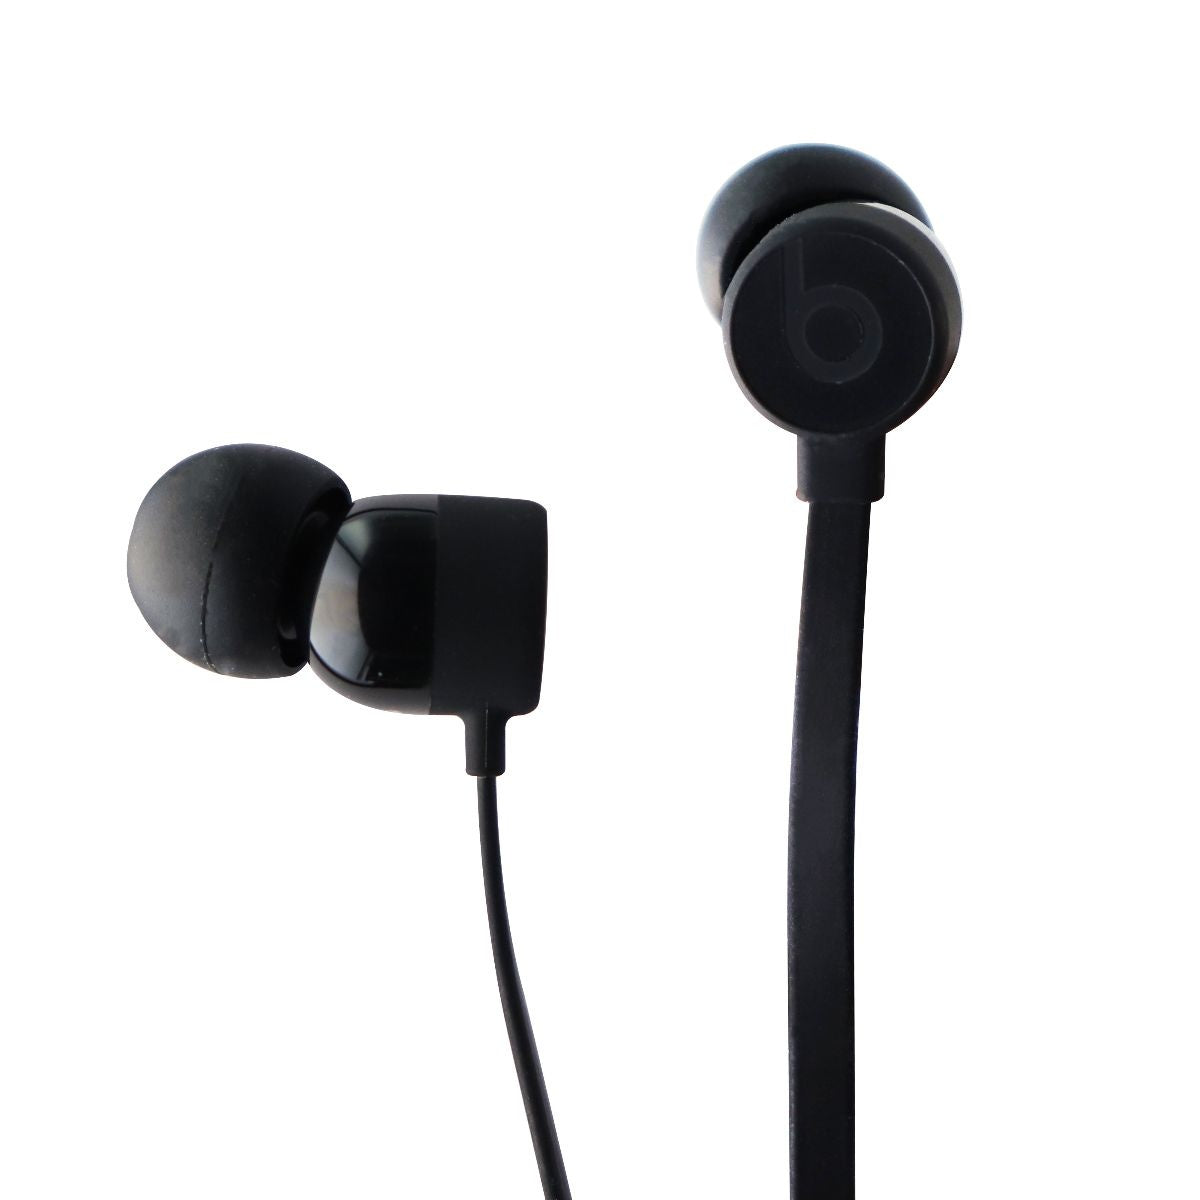 Beats BeatsX Series Wireless In-Ear Neckband Headphones - Black Portable Audio - Headphones Beats by Dr. Dre    - Simple Cell Bulk Wholesale Pricing - USA Seller